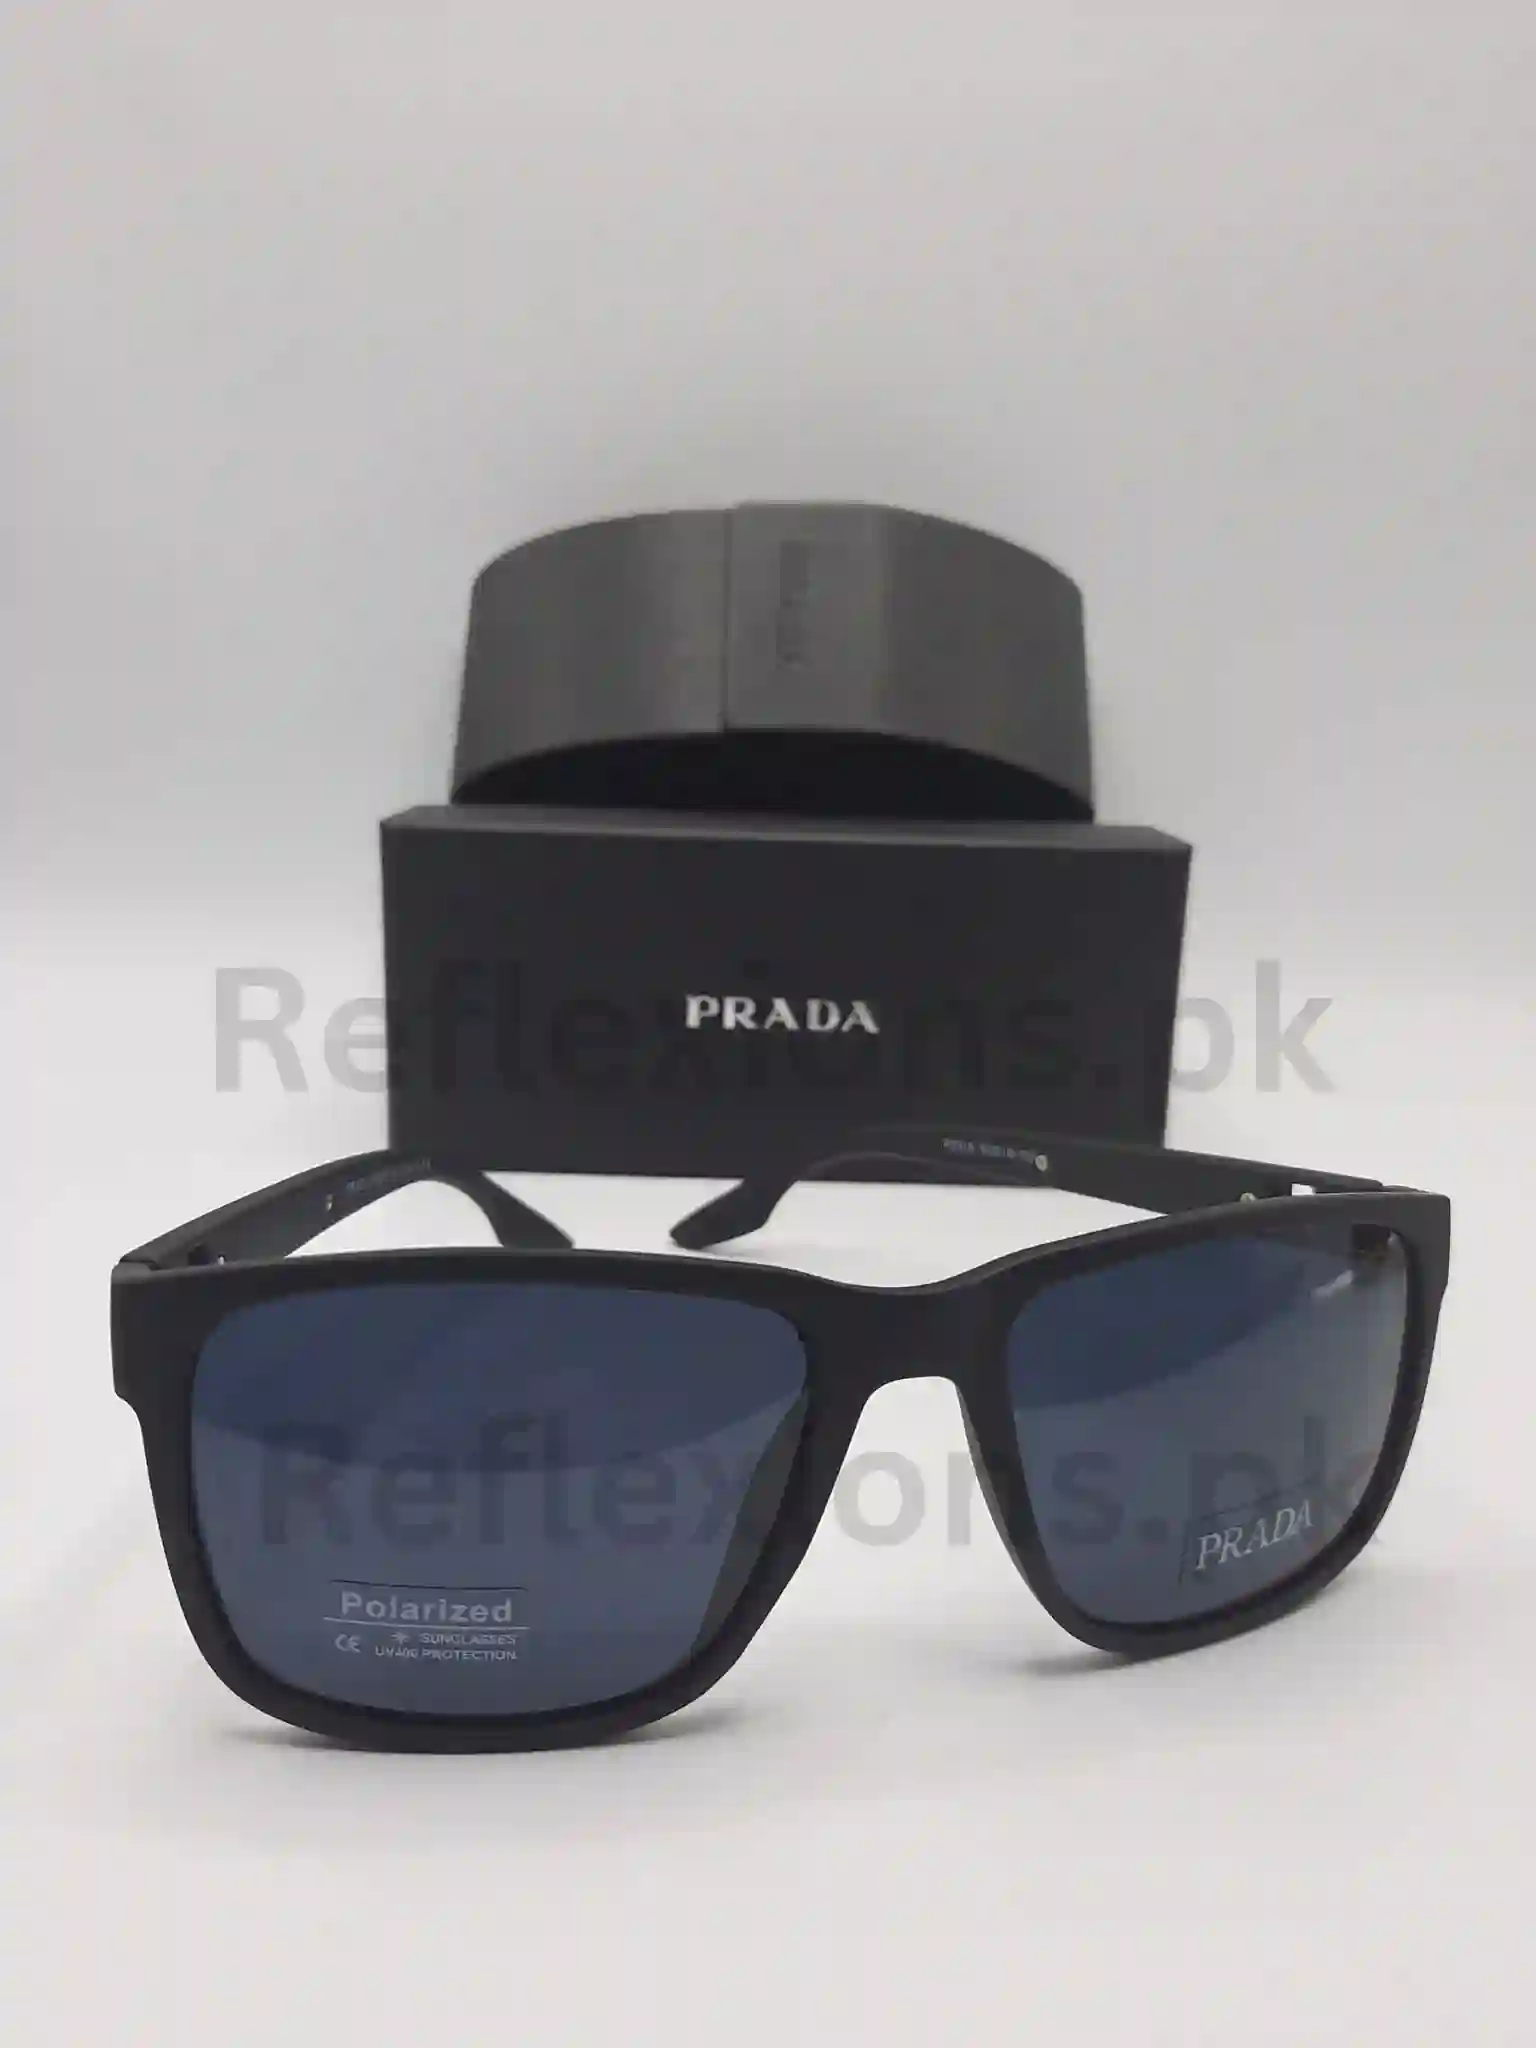 Prada Sunglasses for Men-52423-128